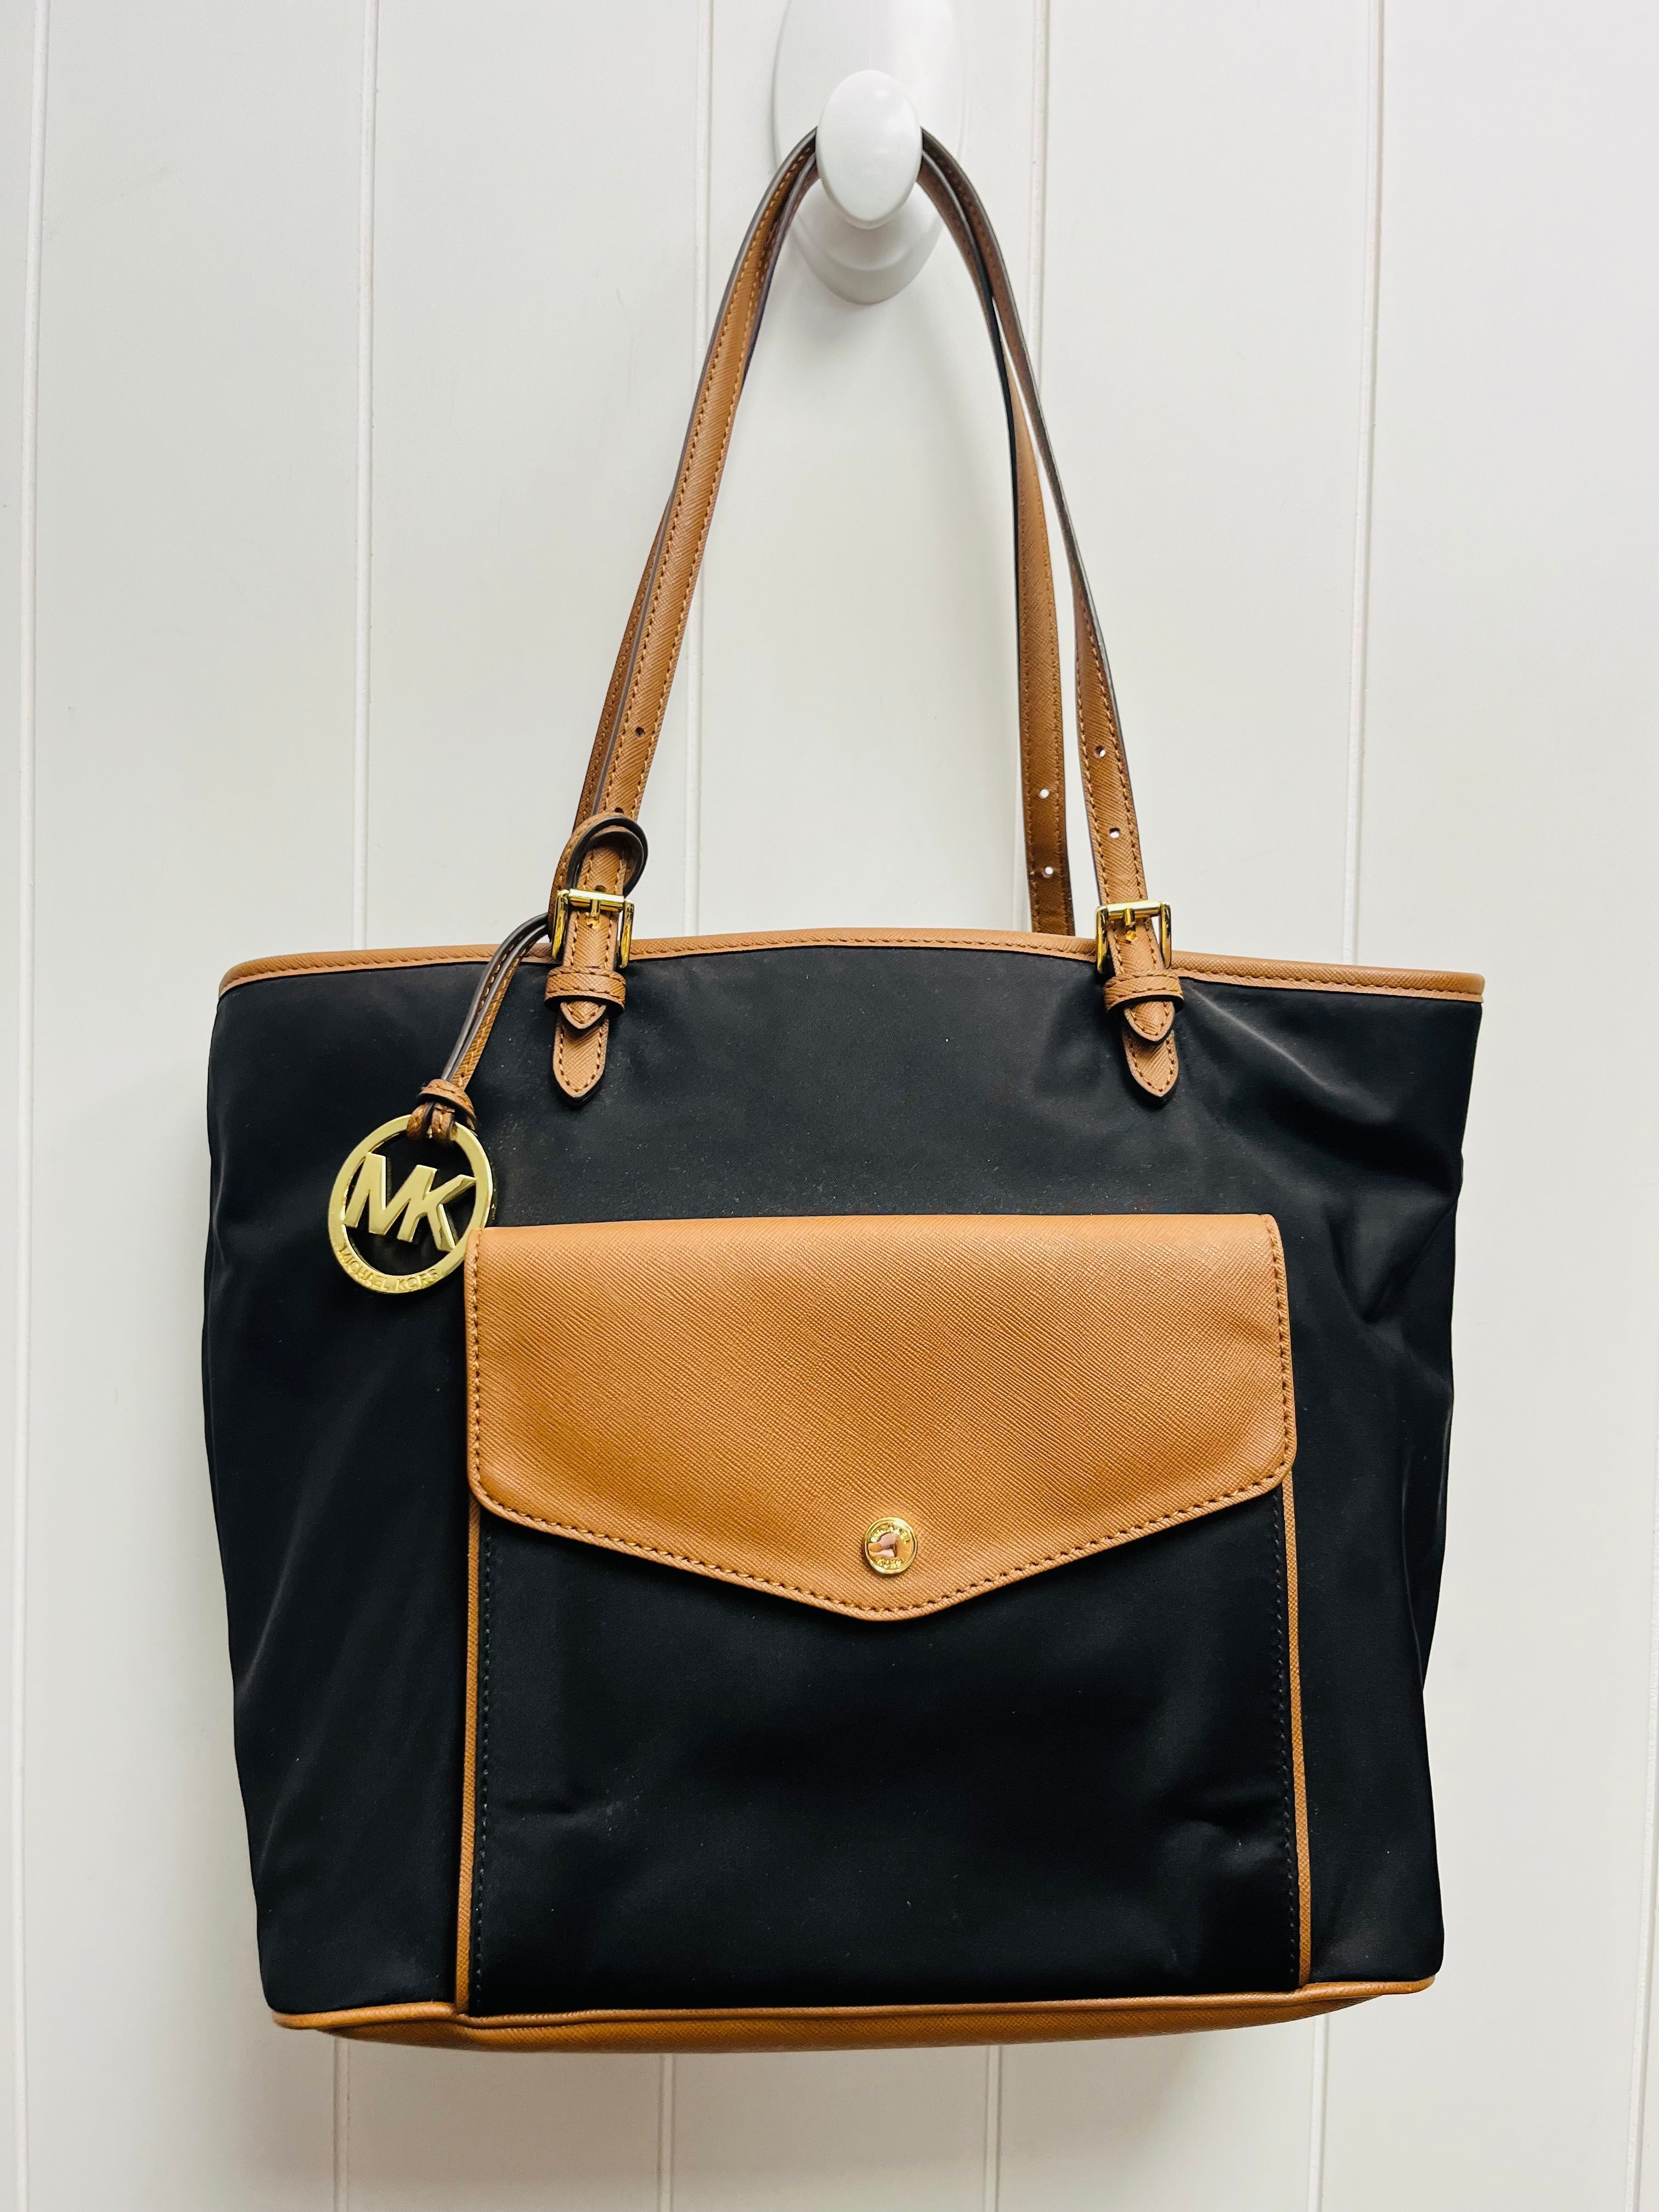 Michael Kors Handbags | Michael Kors Totes, Shoulder Bags & More - Jomashop